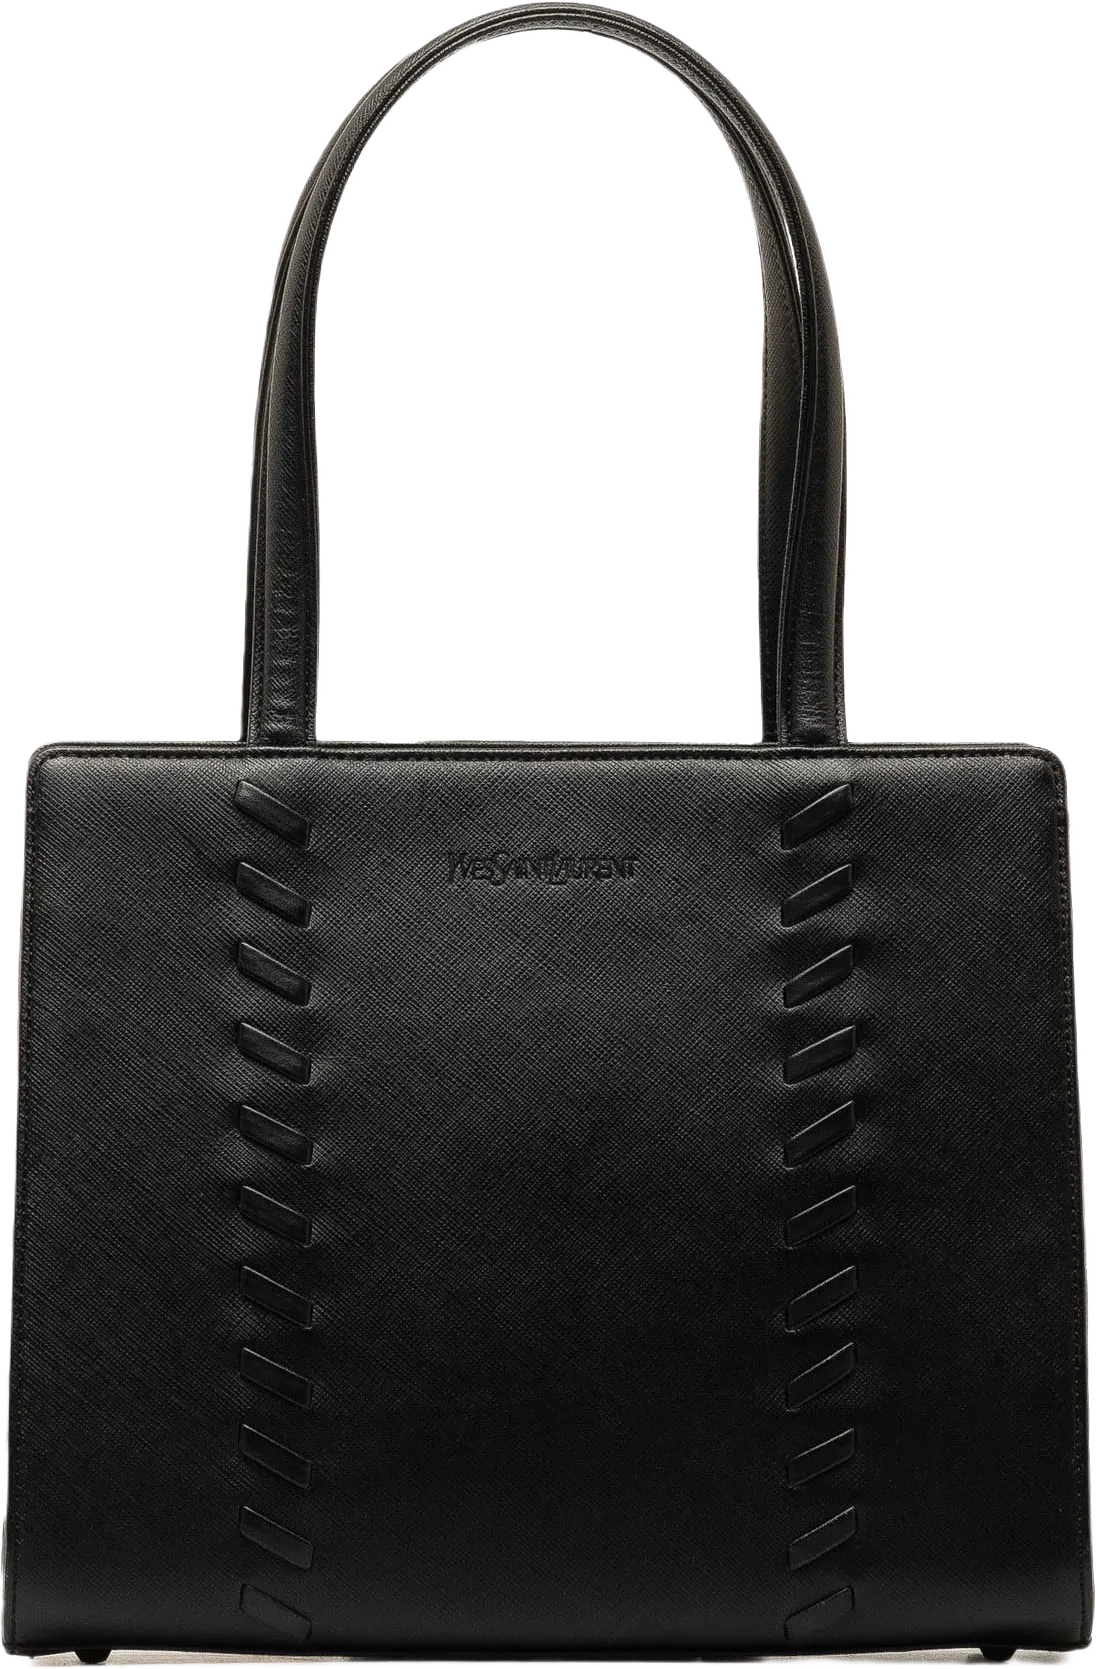 Ysl Leather Handbag